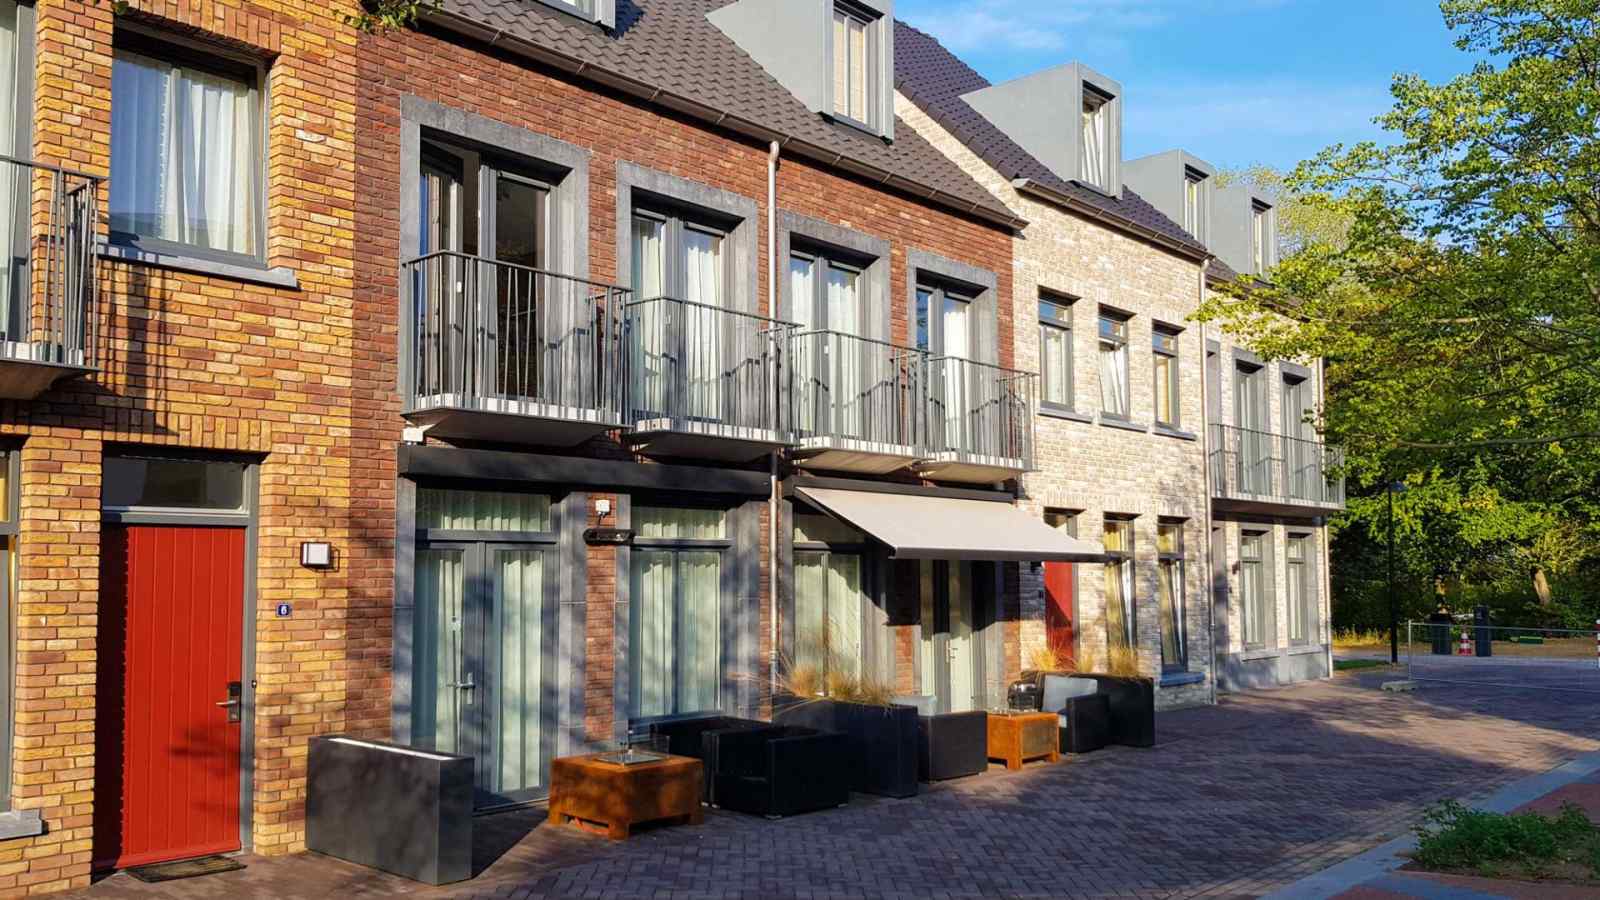 Lifestyle appartement voor 4 personen op Resort Maastricht in Limburg. - Nederland - Europa - Maastricht